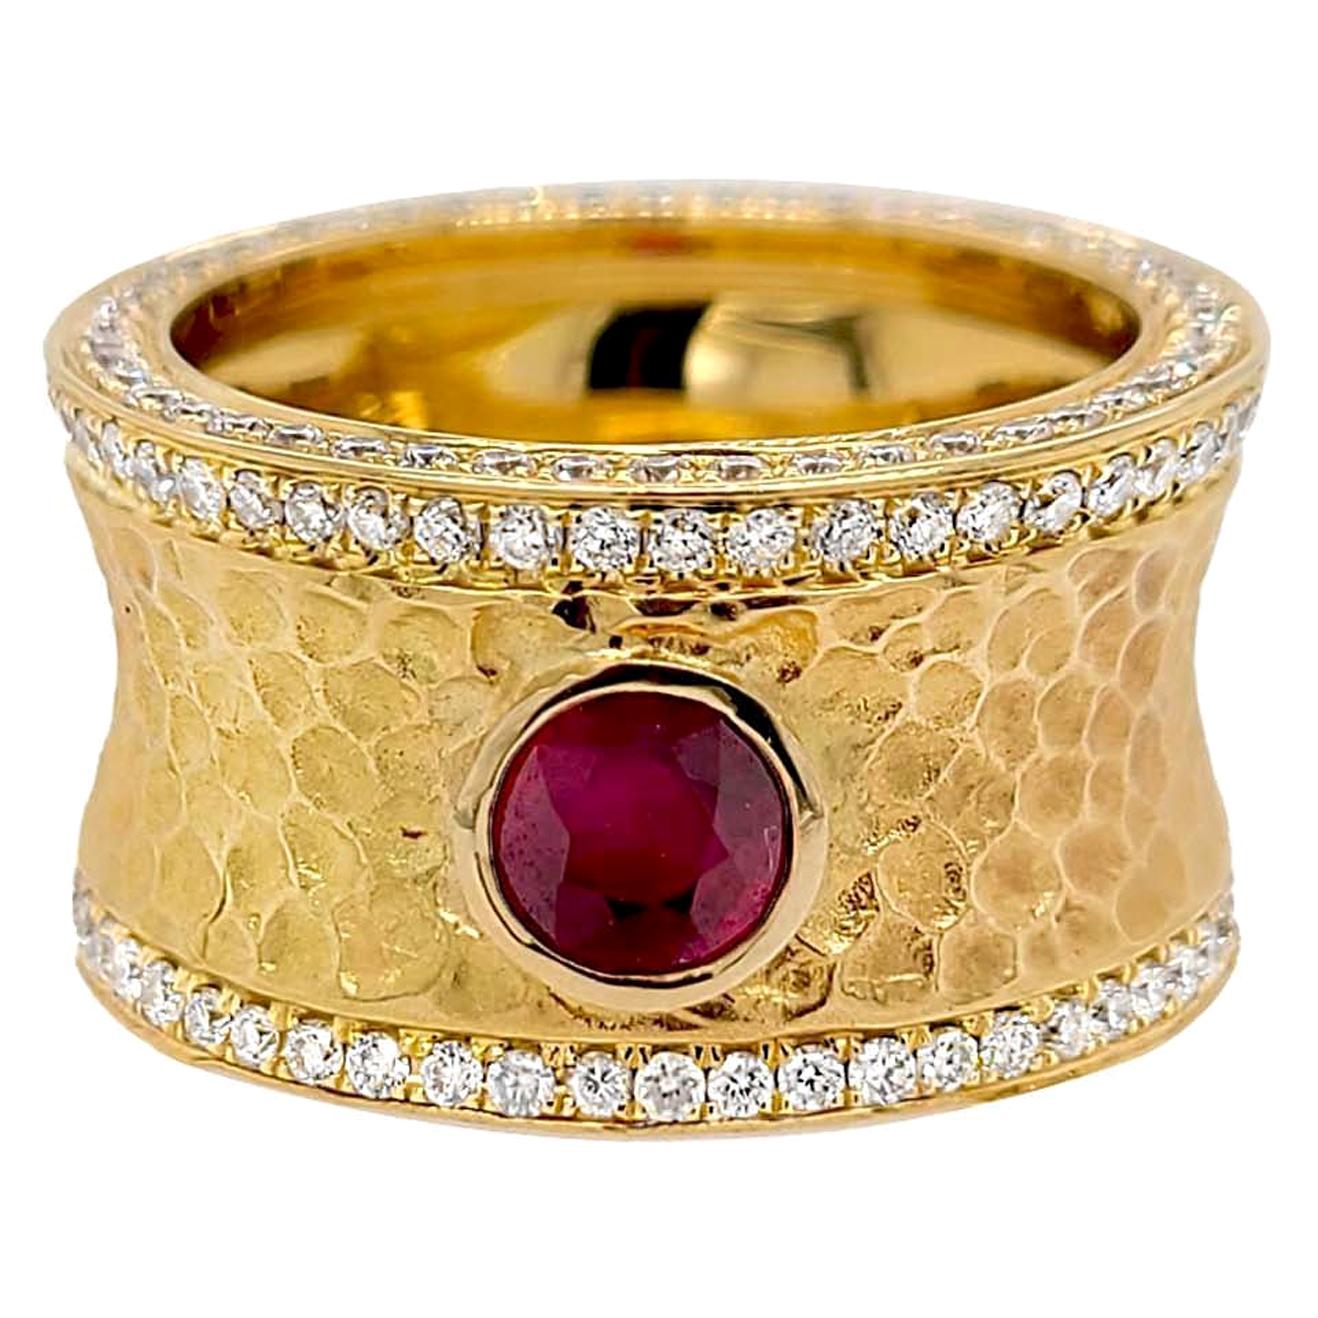 Hammer Finish Two-Tone 18 Karat Italian Diamond Ring with Ruby Center Stone